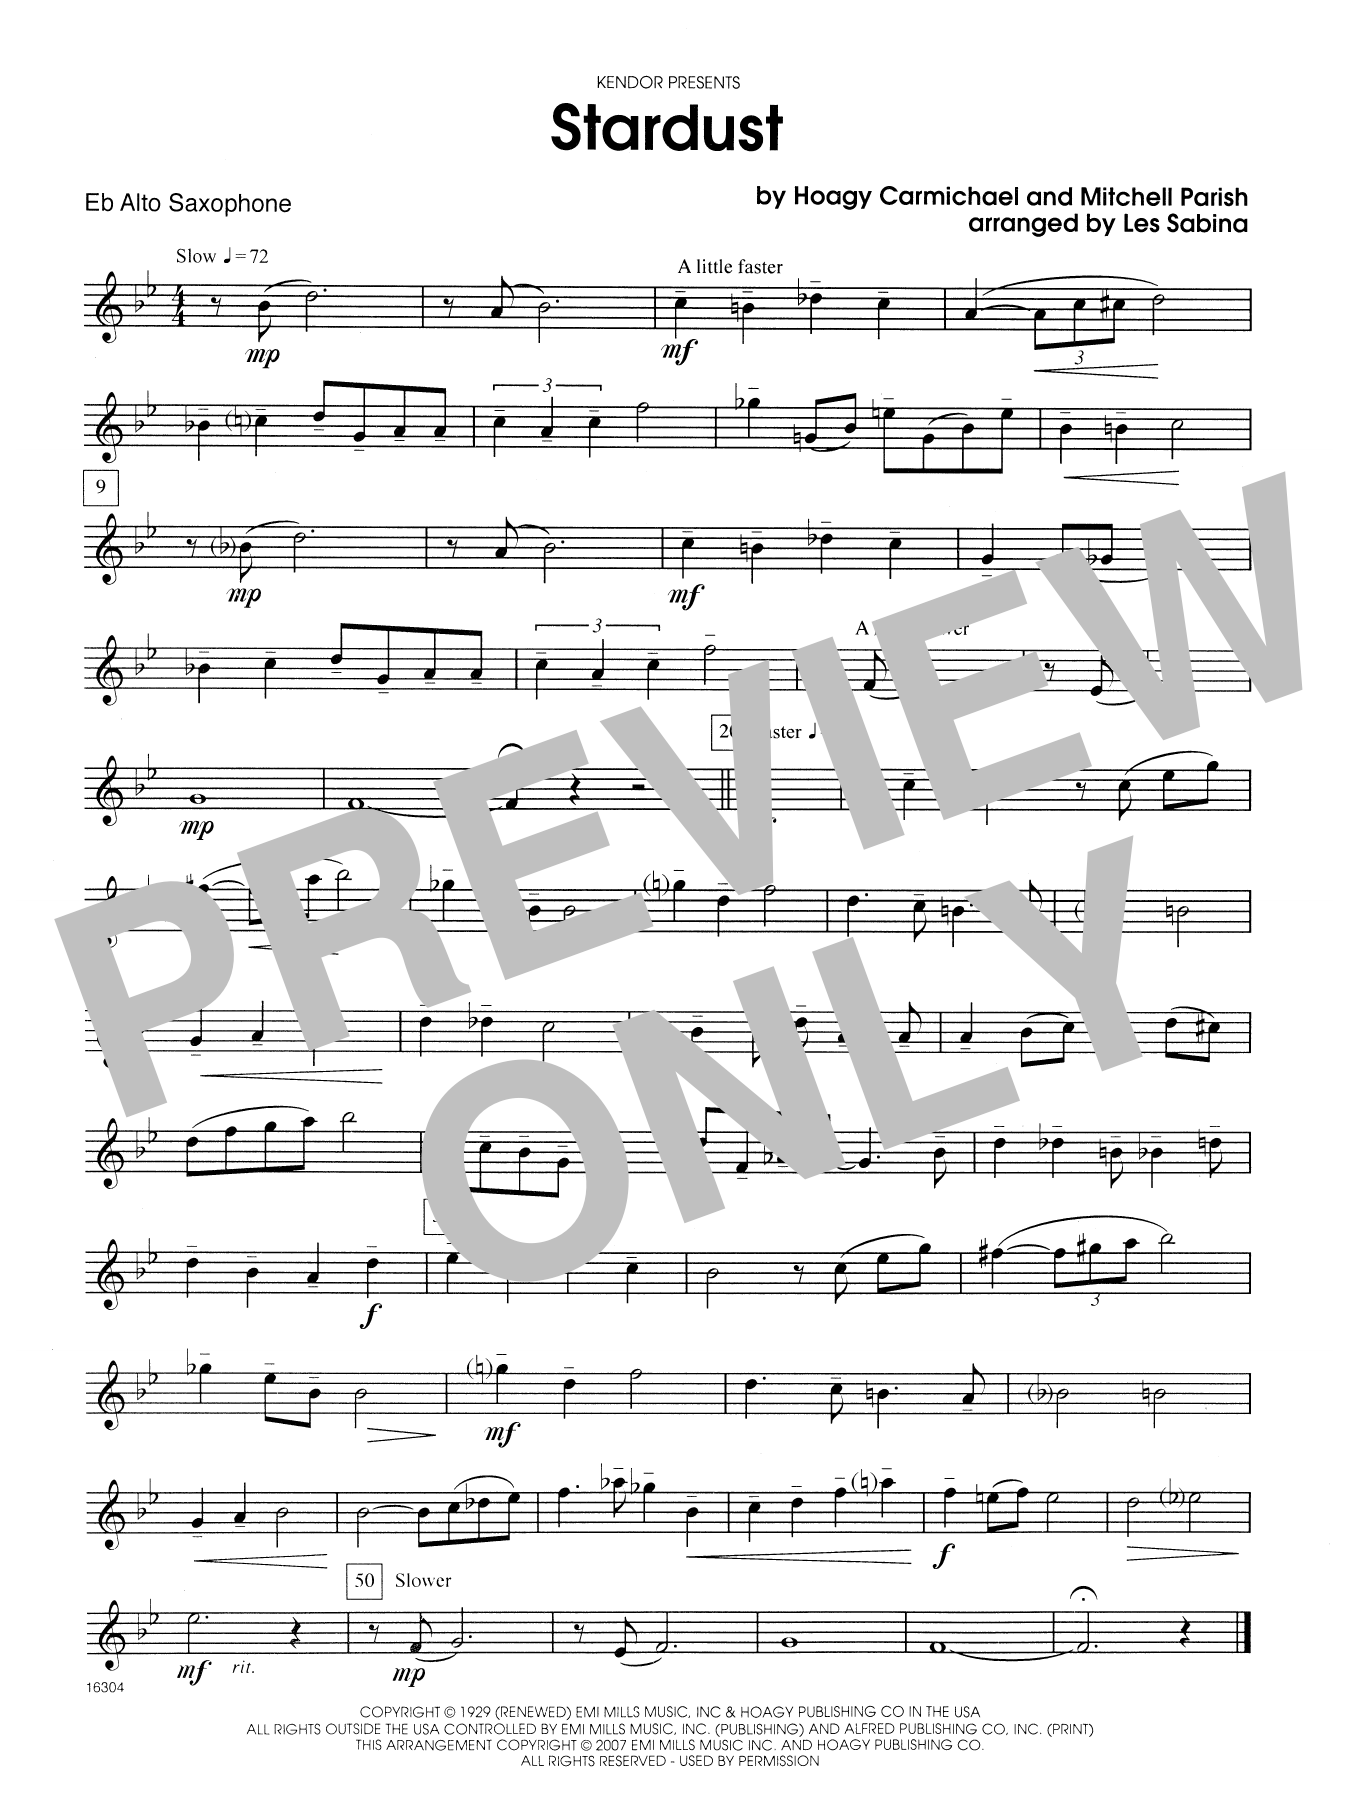 Les Sabina Stardust - Eb Alto Saxophone sheet music notes and chords. Download Printable PDF.